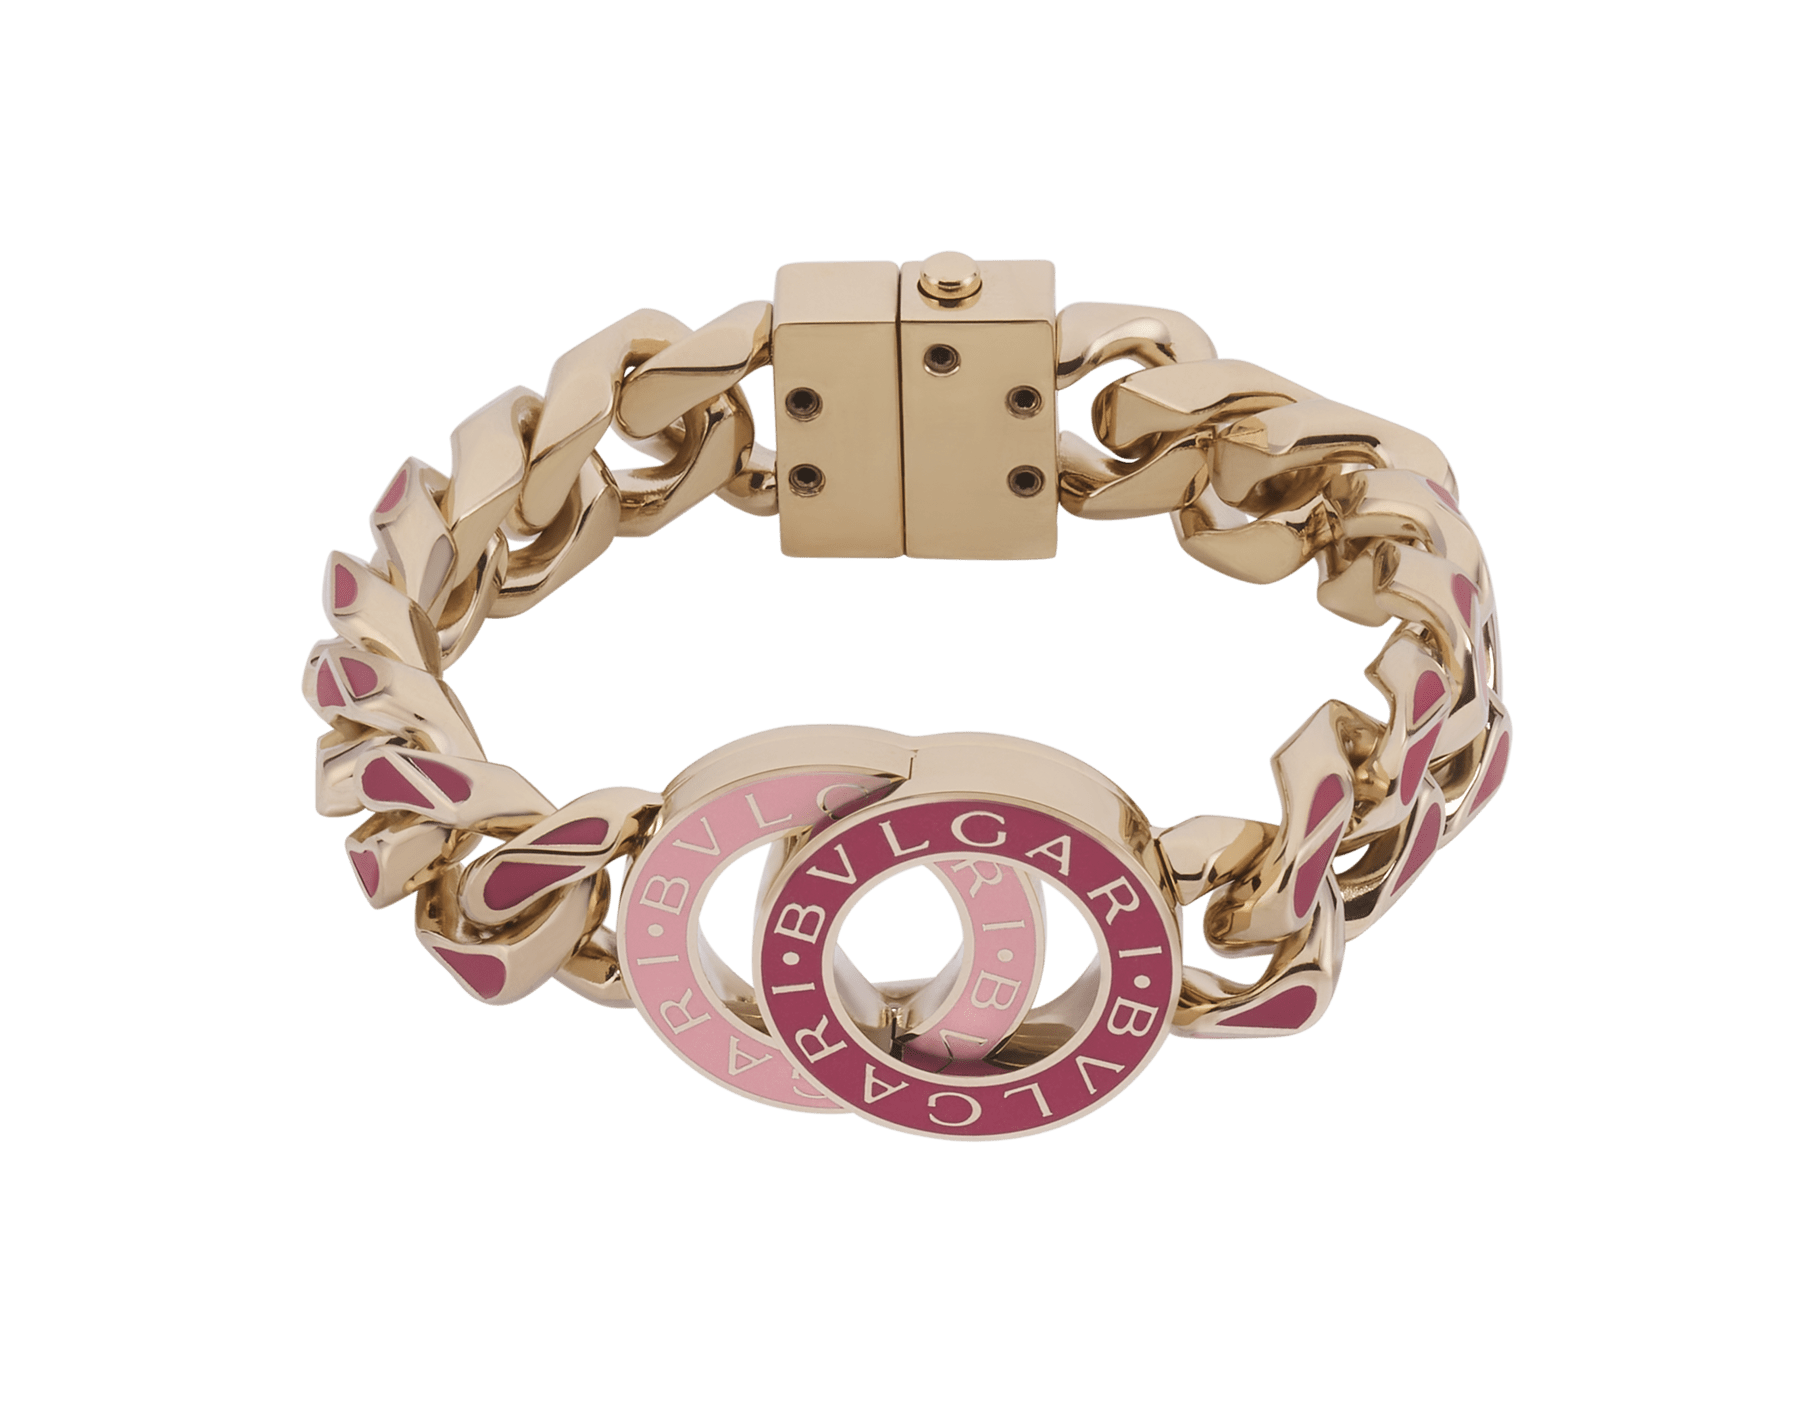 BULGARI BULGARI Maxi Chain bracelet in light gold-plated brass with anemone spinel pinkish red and primrose quartz pink enamel inserts. Iconic décor enamelled in anemone spinel pinkish red and primrose quartz pink, and clasp closure. CHUNKYBBBRCLT-MC image 1